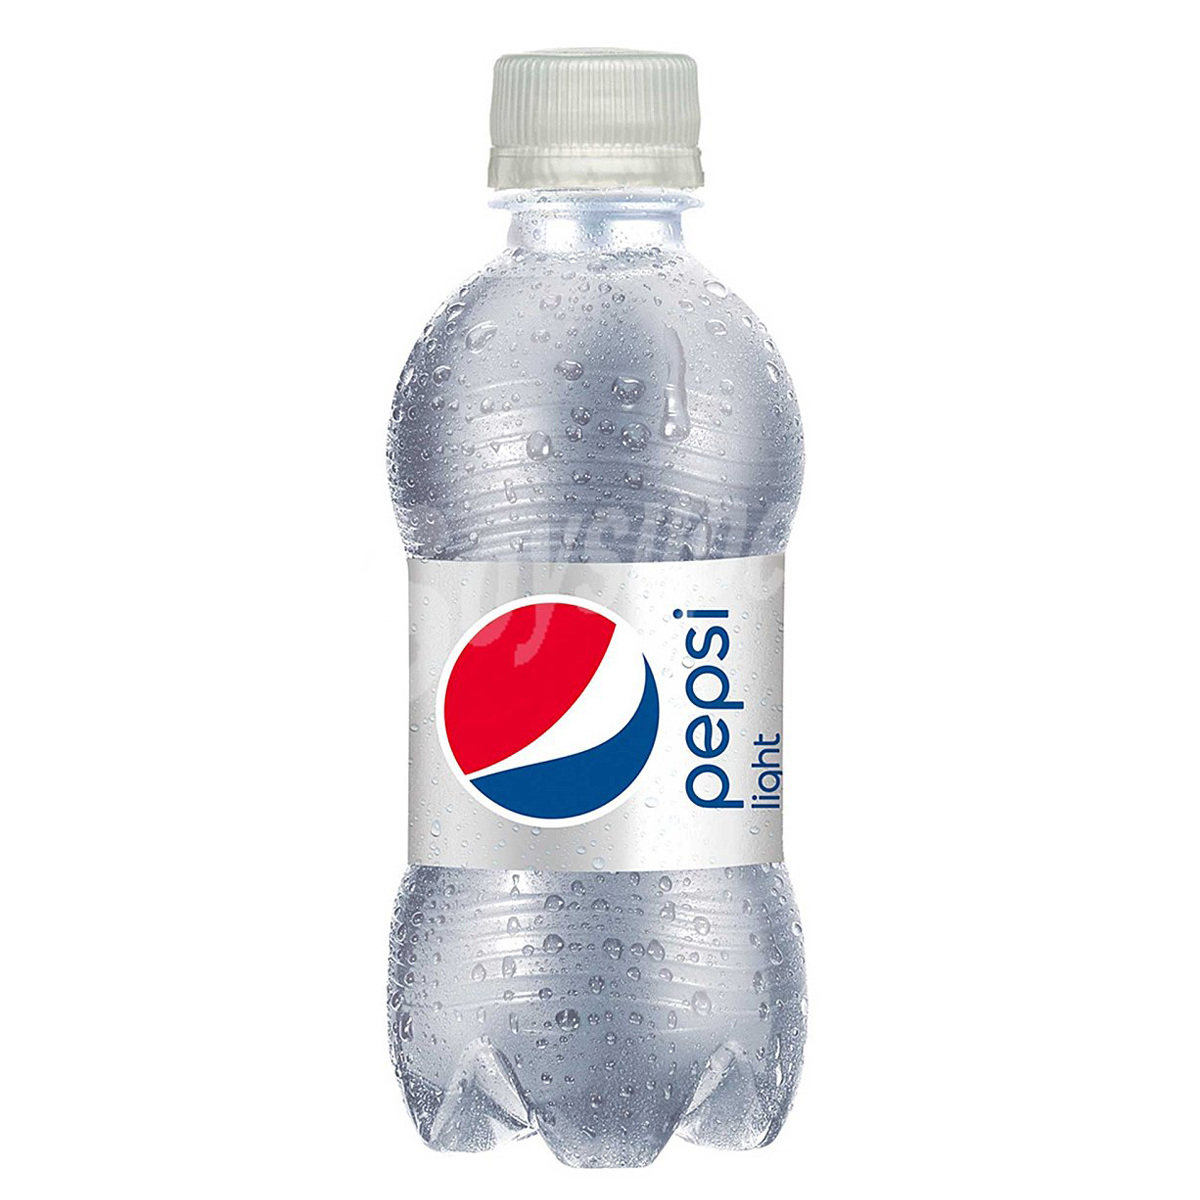 50cl Pepsi light